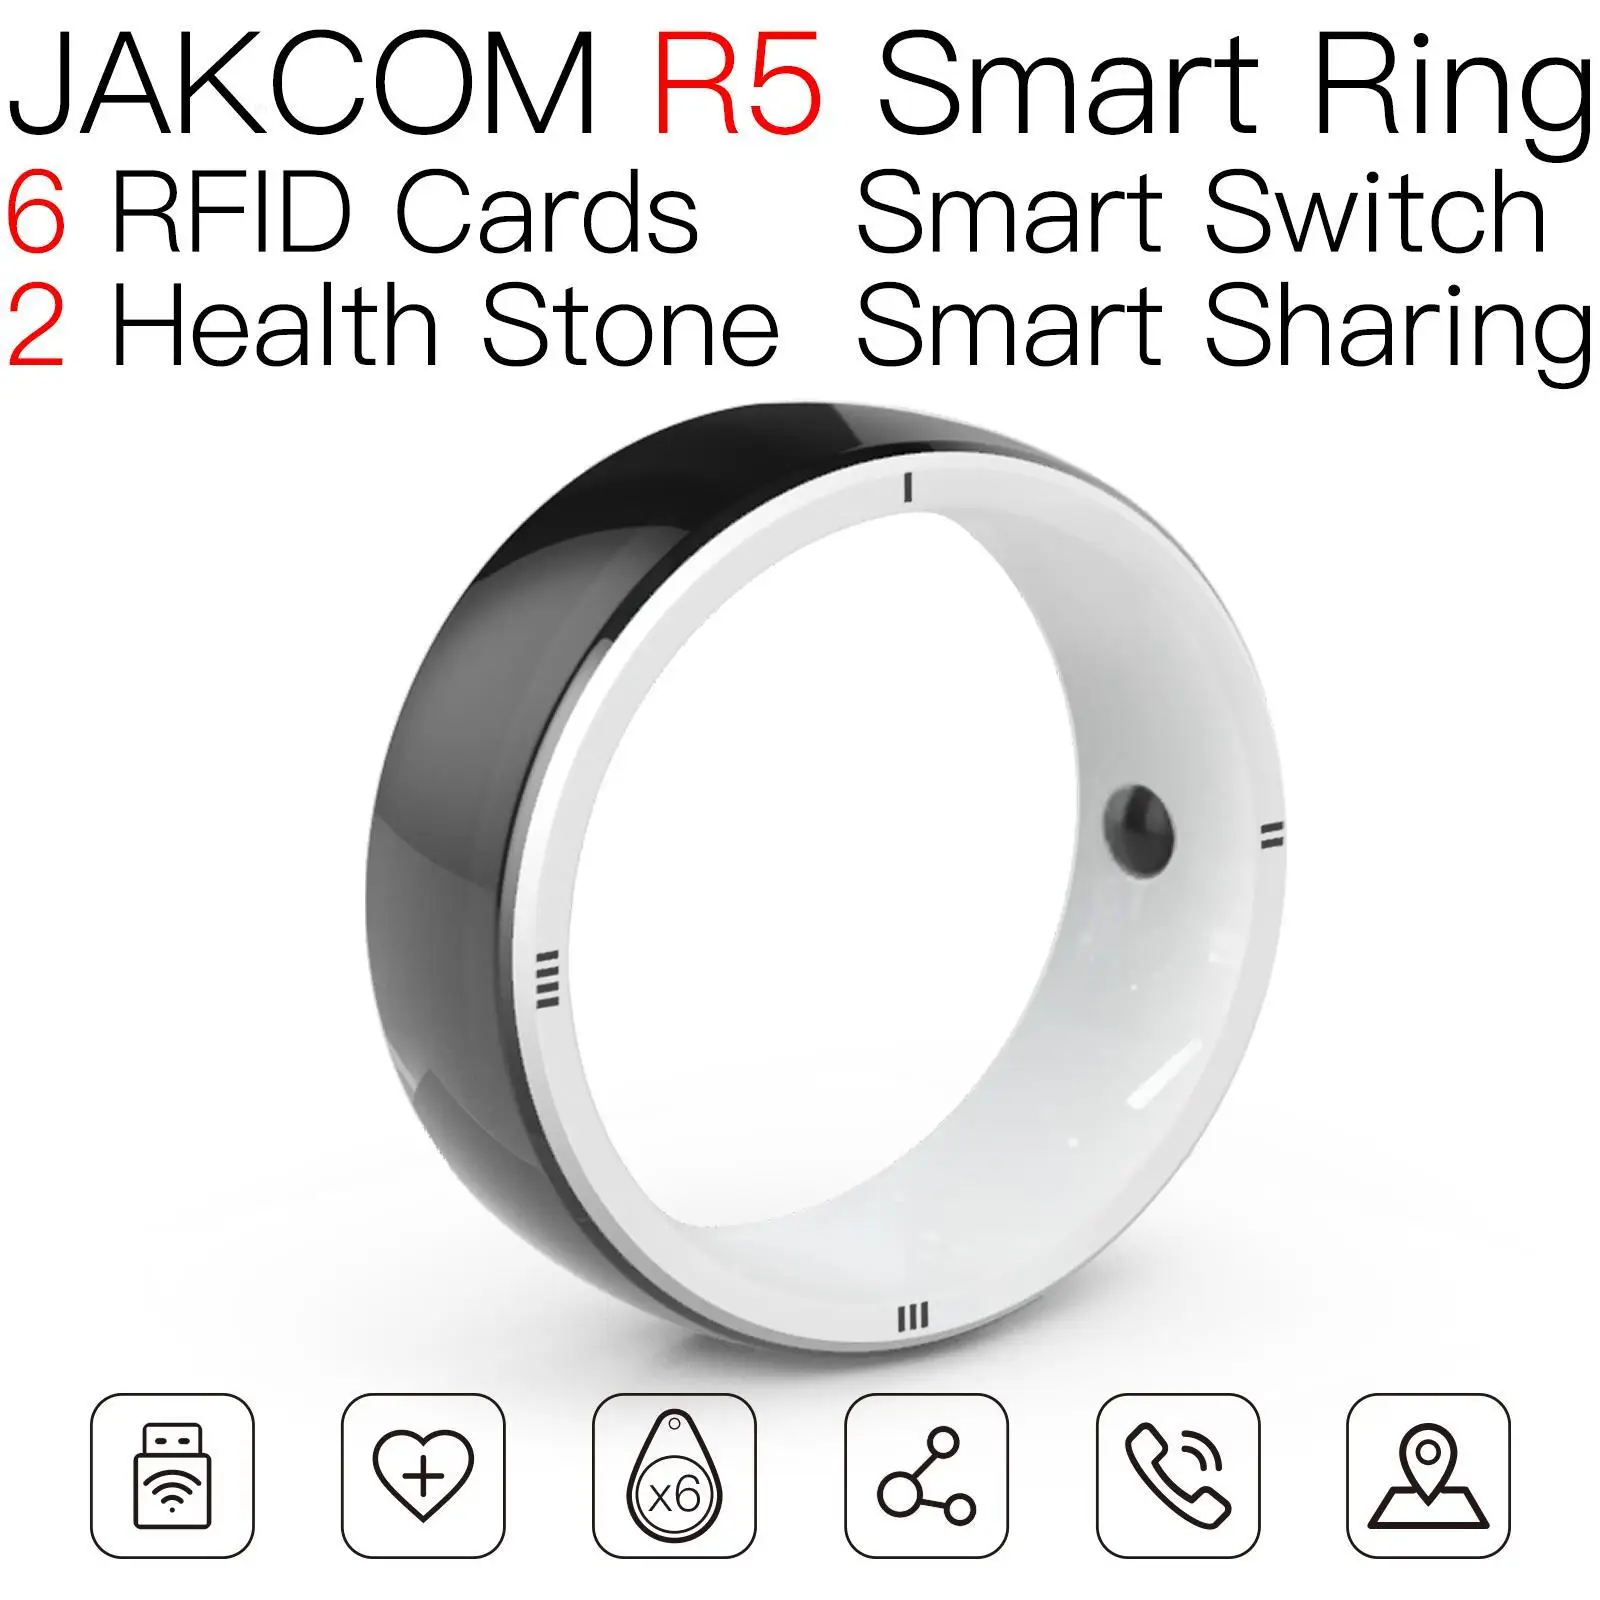 

JAKCOM R5 Smart Ring Newer than uid tag interruptor price shelf nfc sticker 20 pcs aniaml crossing new horizon amiboo opamp